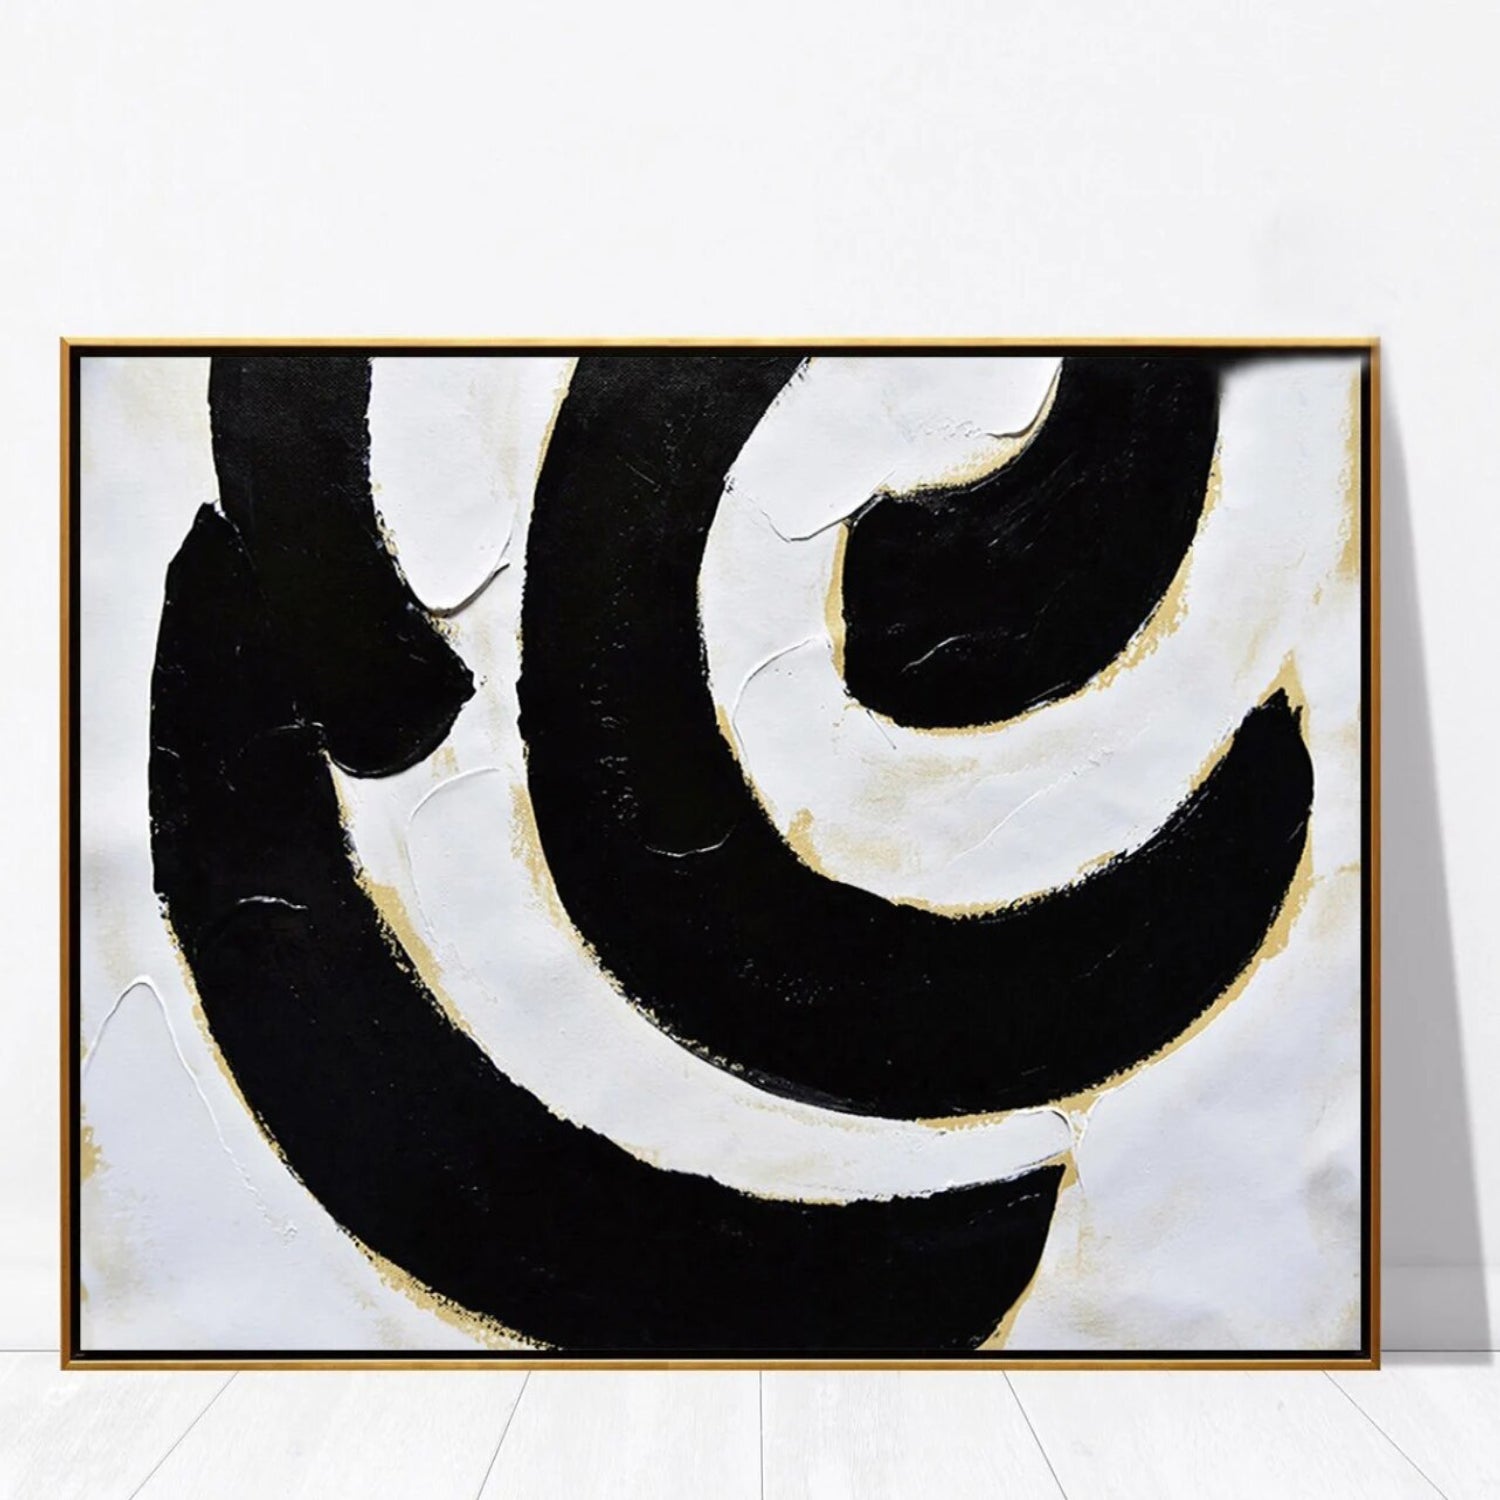 Black and White Thick Swirl Minimalist Wall Art